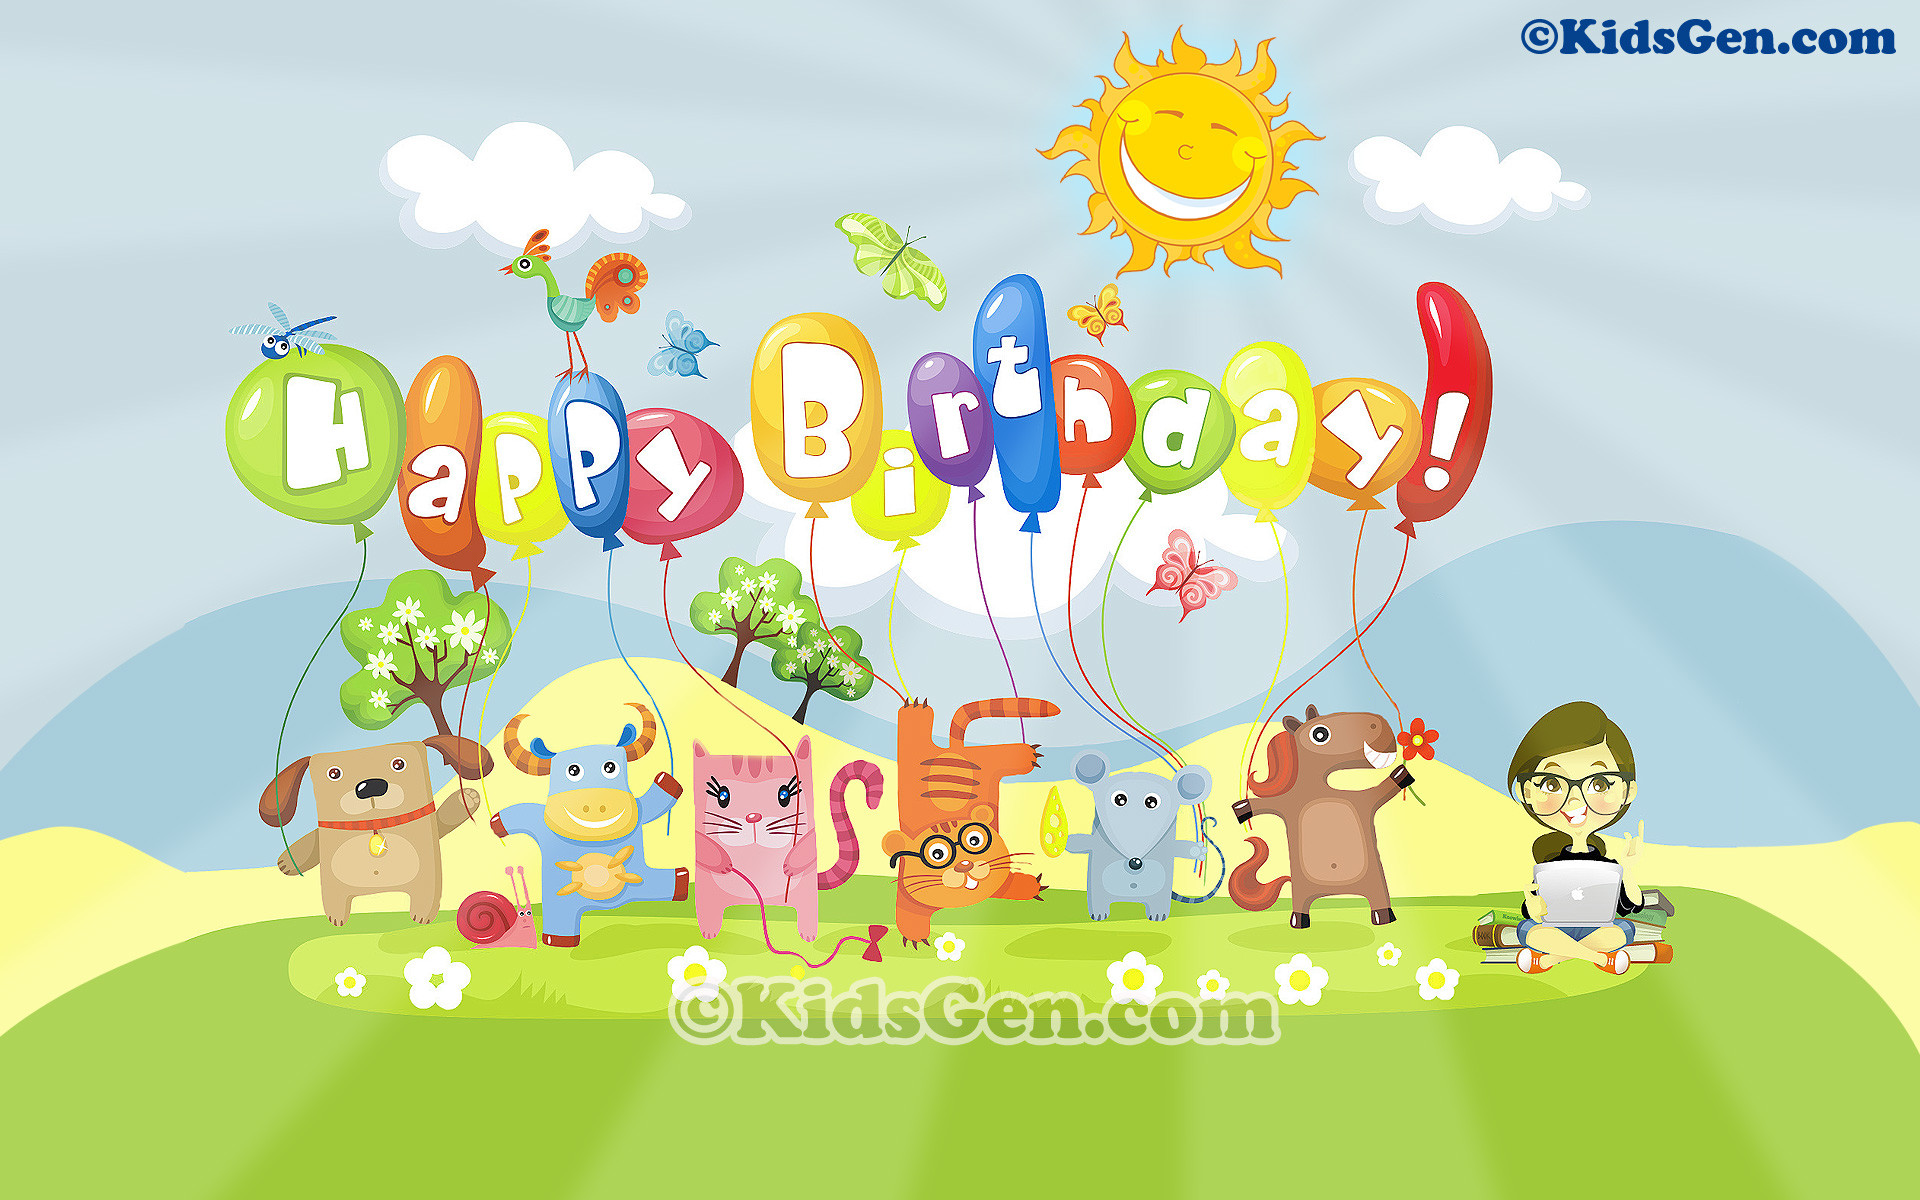 1920x1200 HD cartoon wallpaper featuring animals wishing Happy Birthday